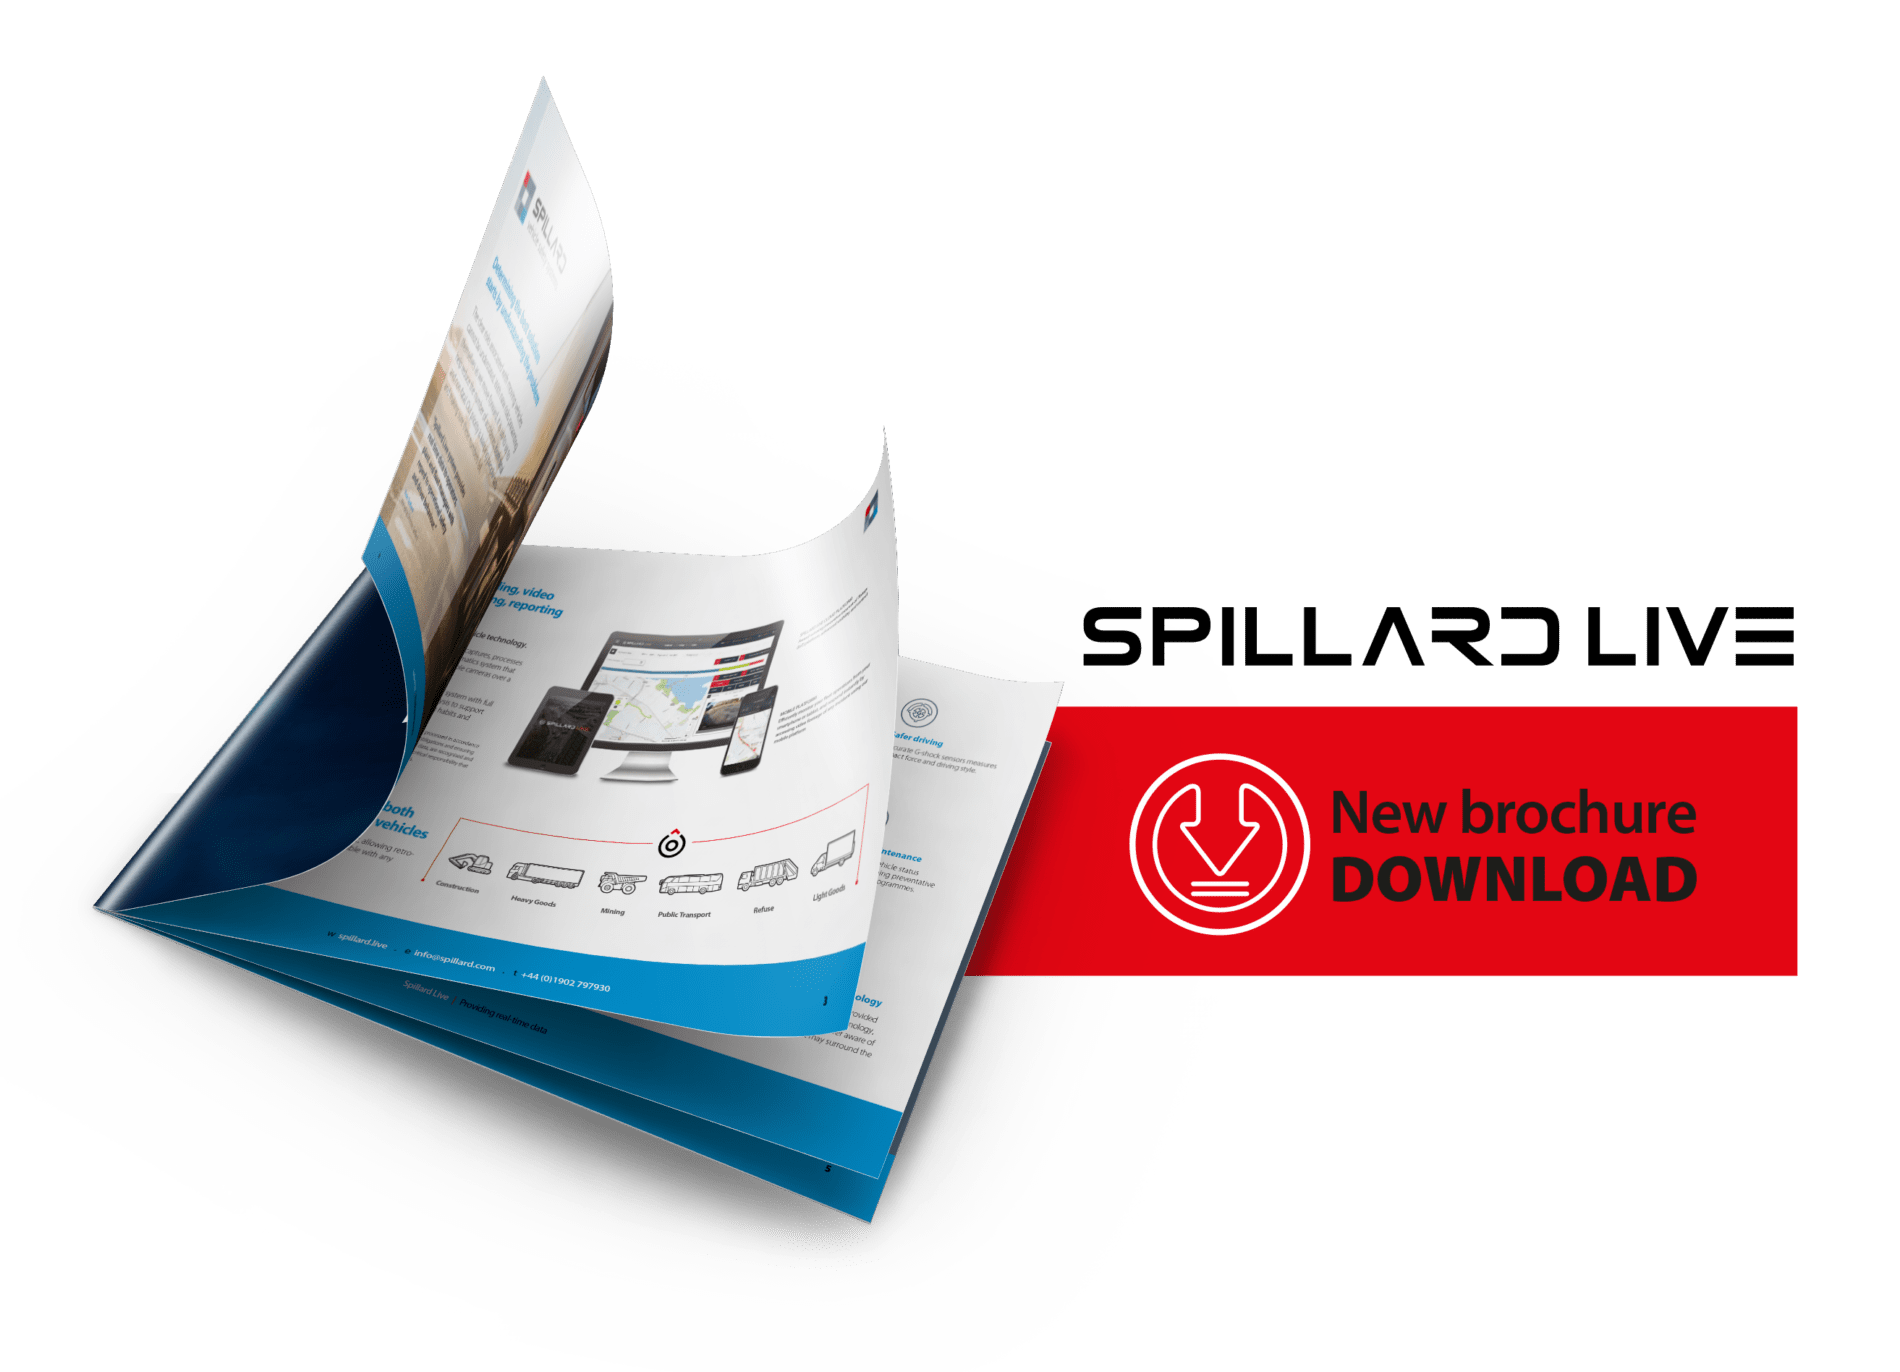 Mining and Quarrying - A4 Spillard LIVE brochure visual